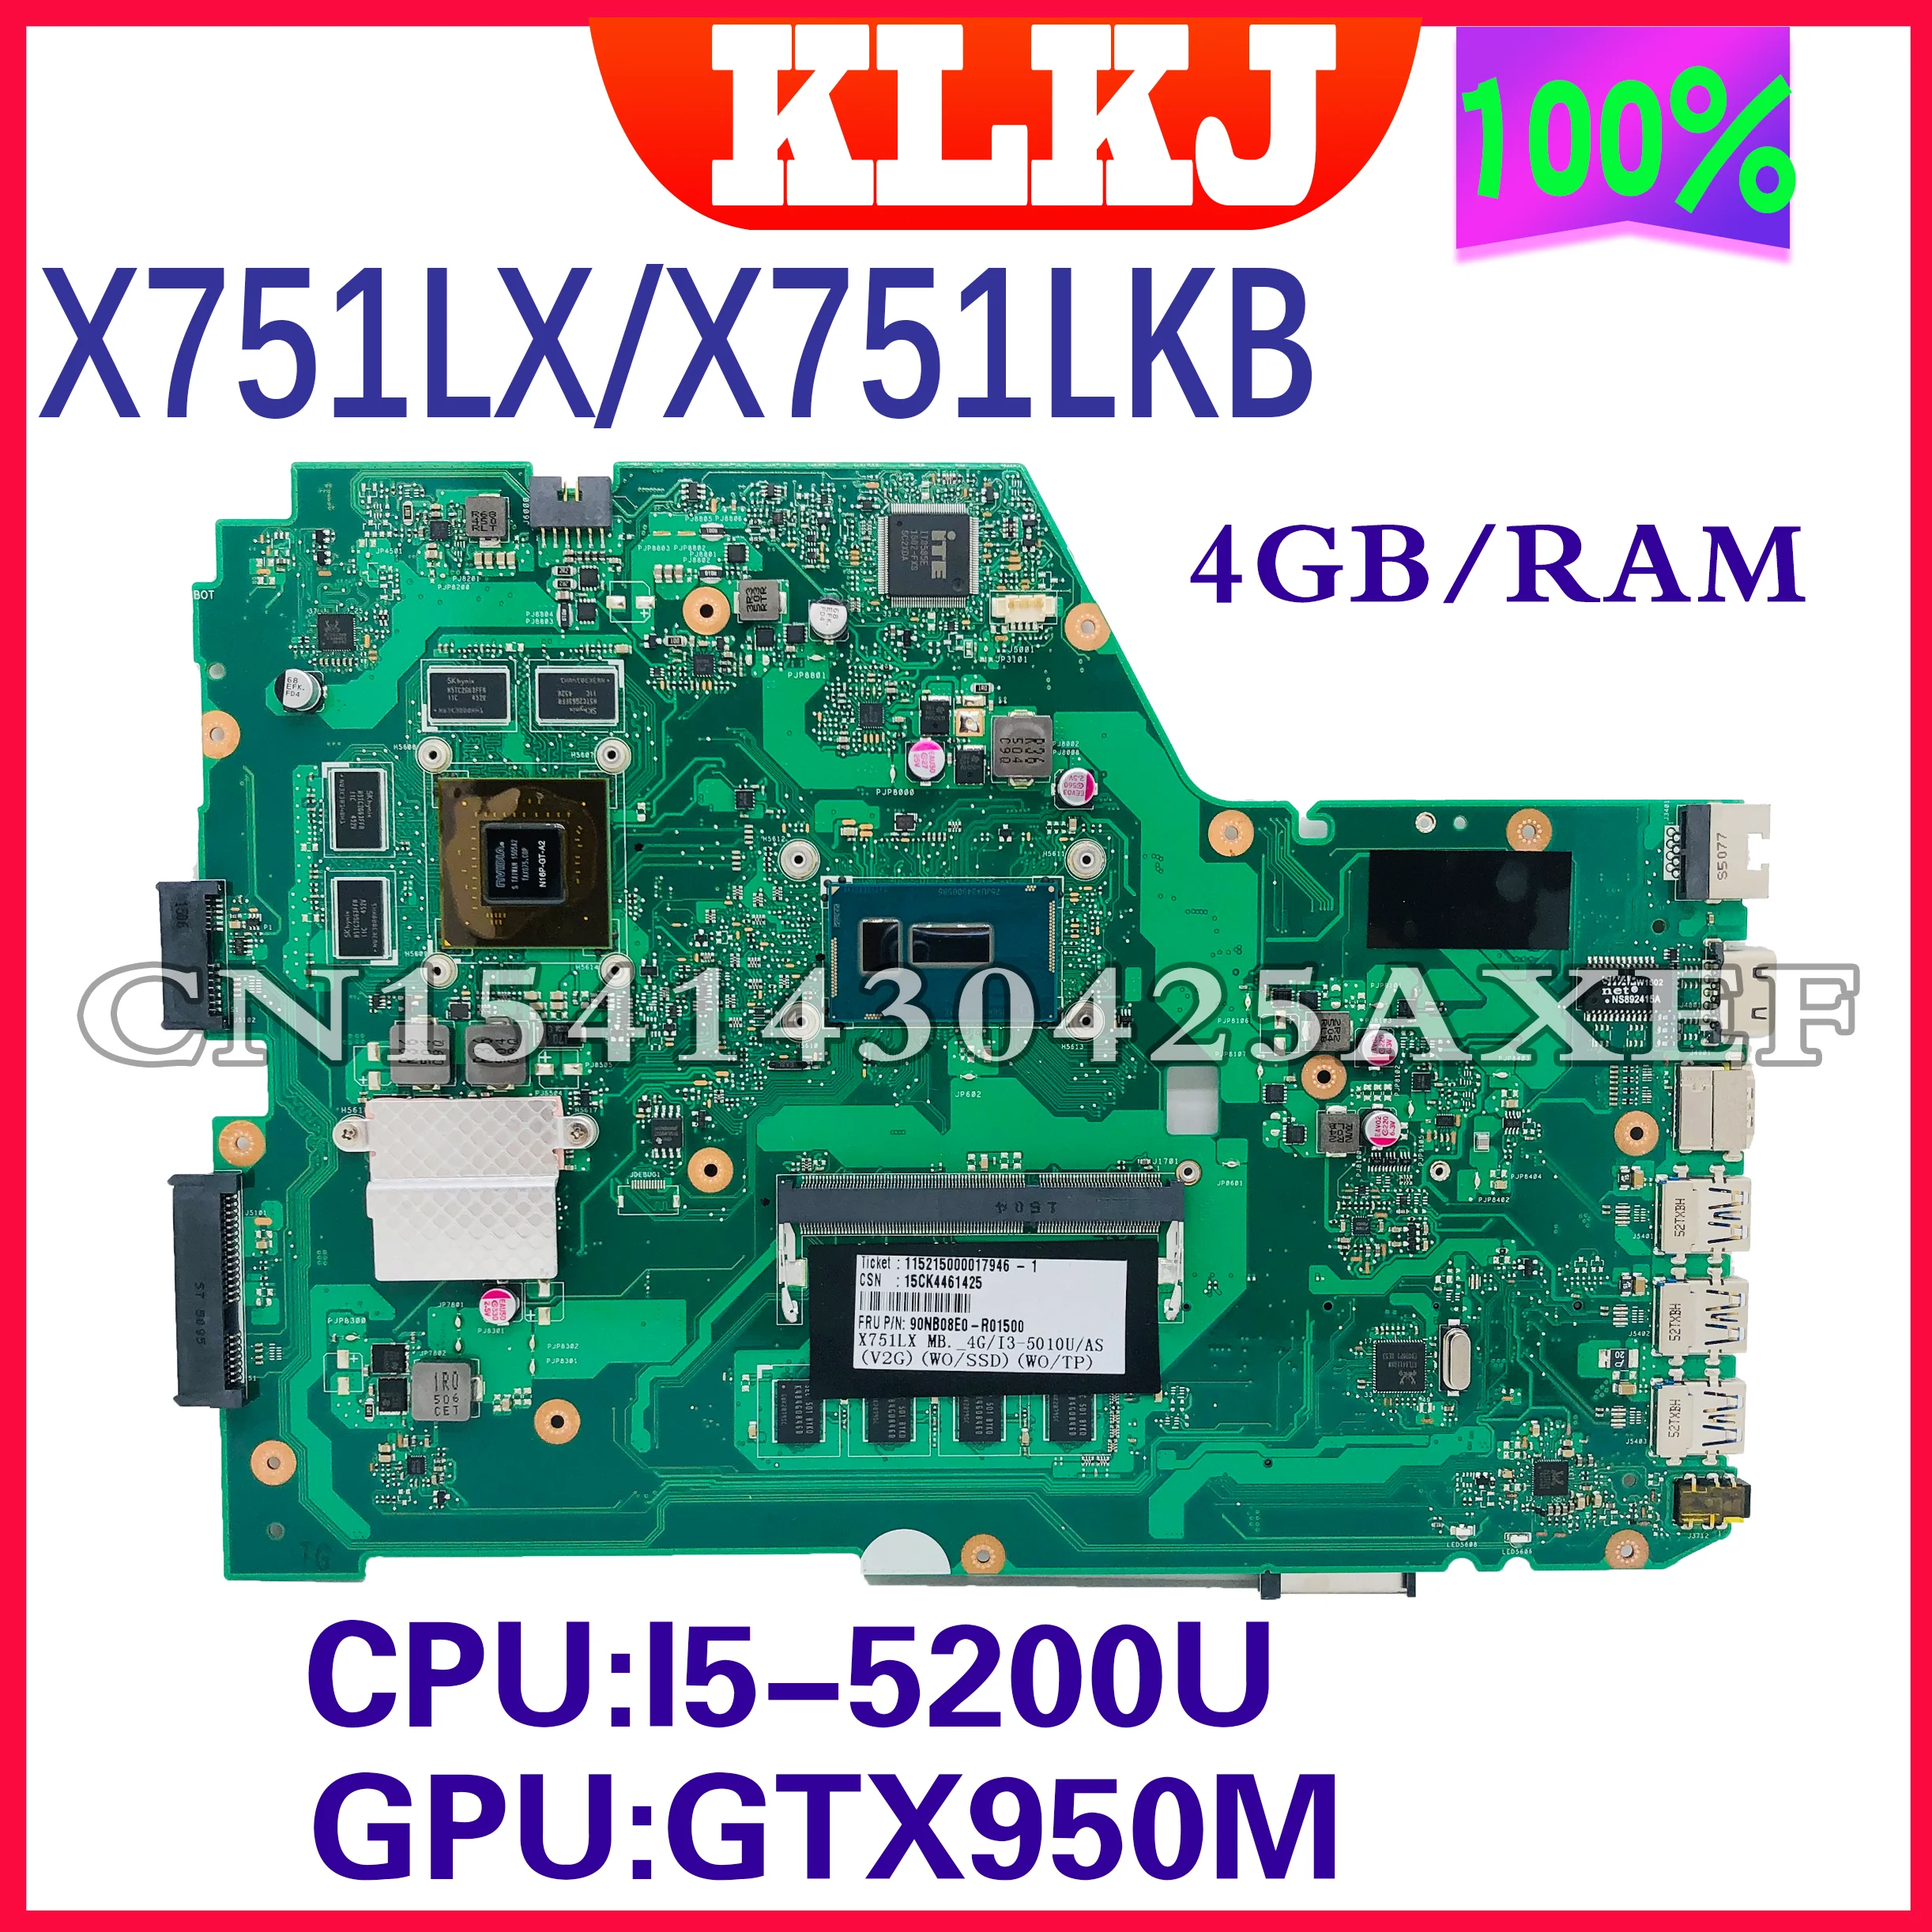 Dinzi X751LX  Motherboard for ASUS X751L K751L X751LK X751LX K751LKB  Notebook Motherboard I5-5200U GTX950M 4G/RAM 100% Test OK budget gaming pc motherboard